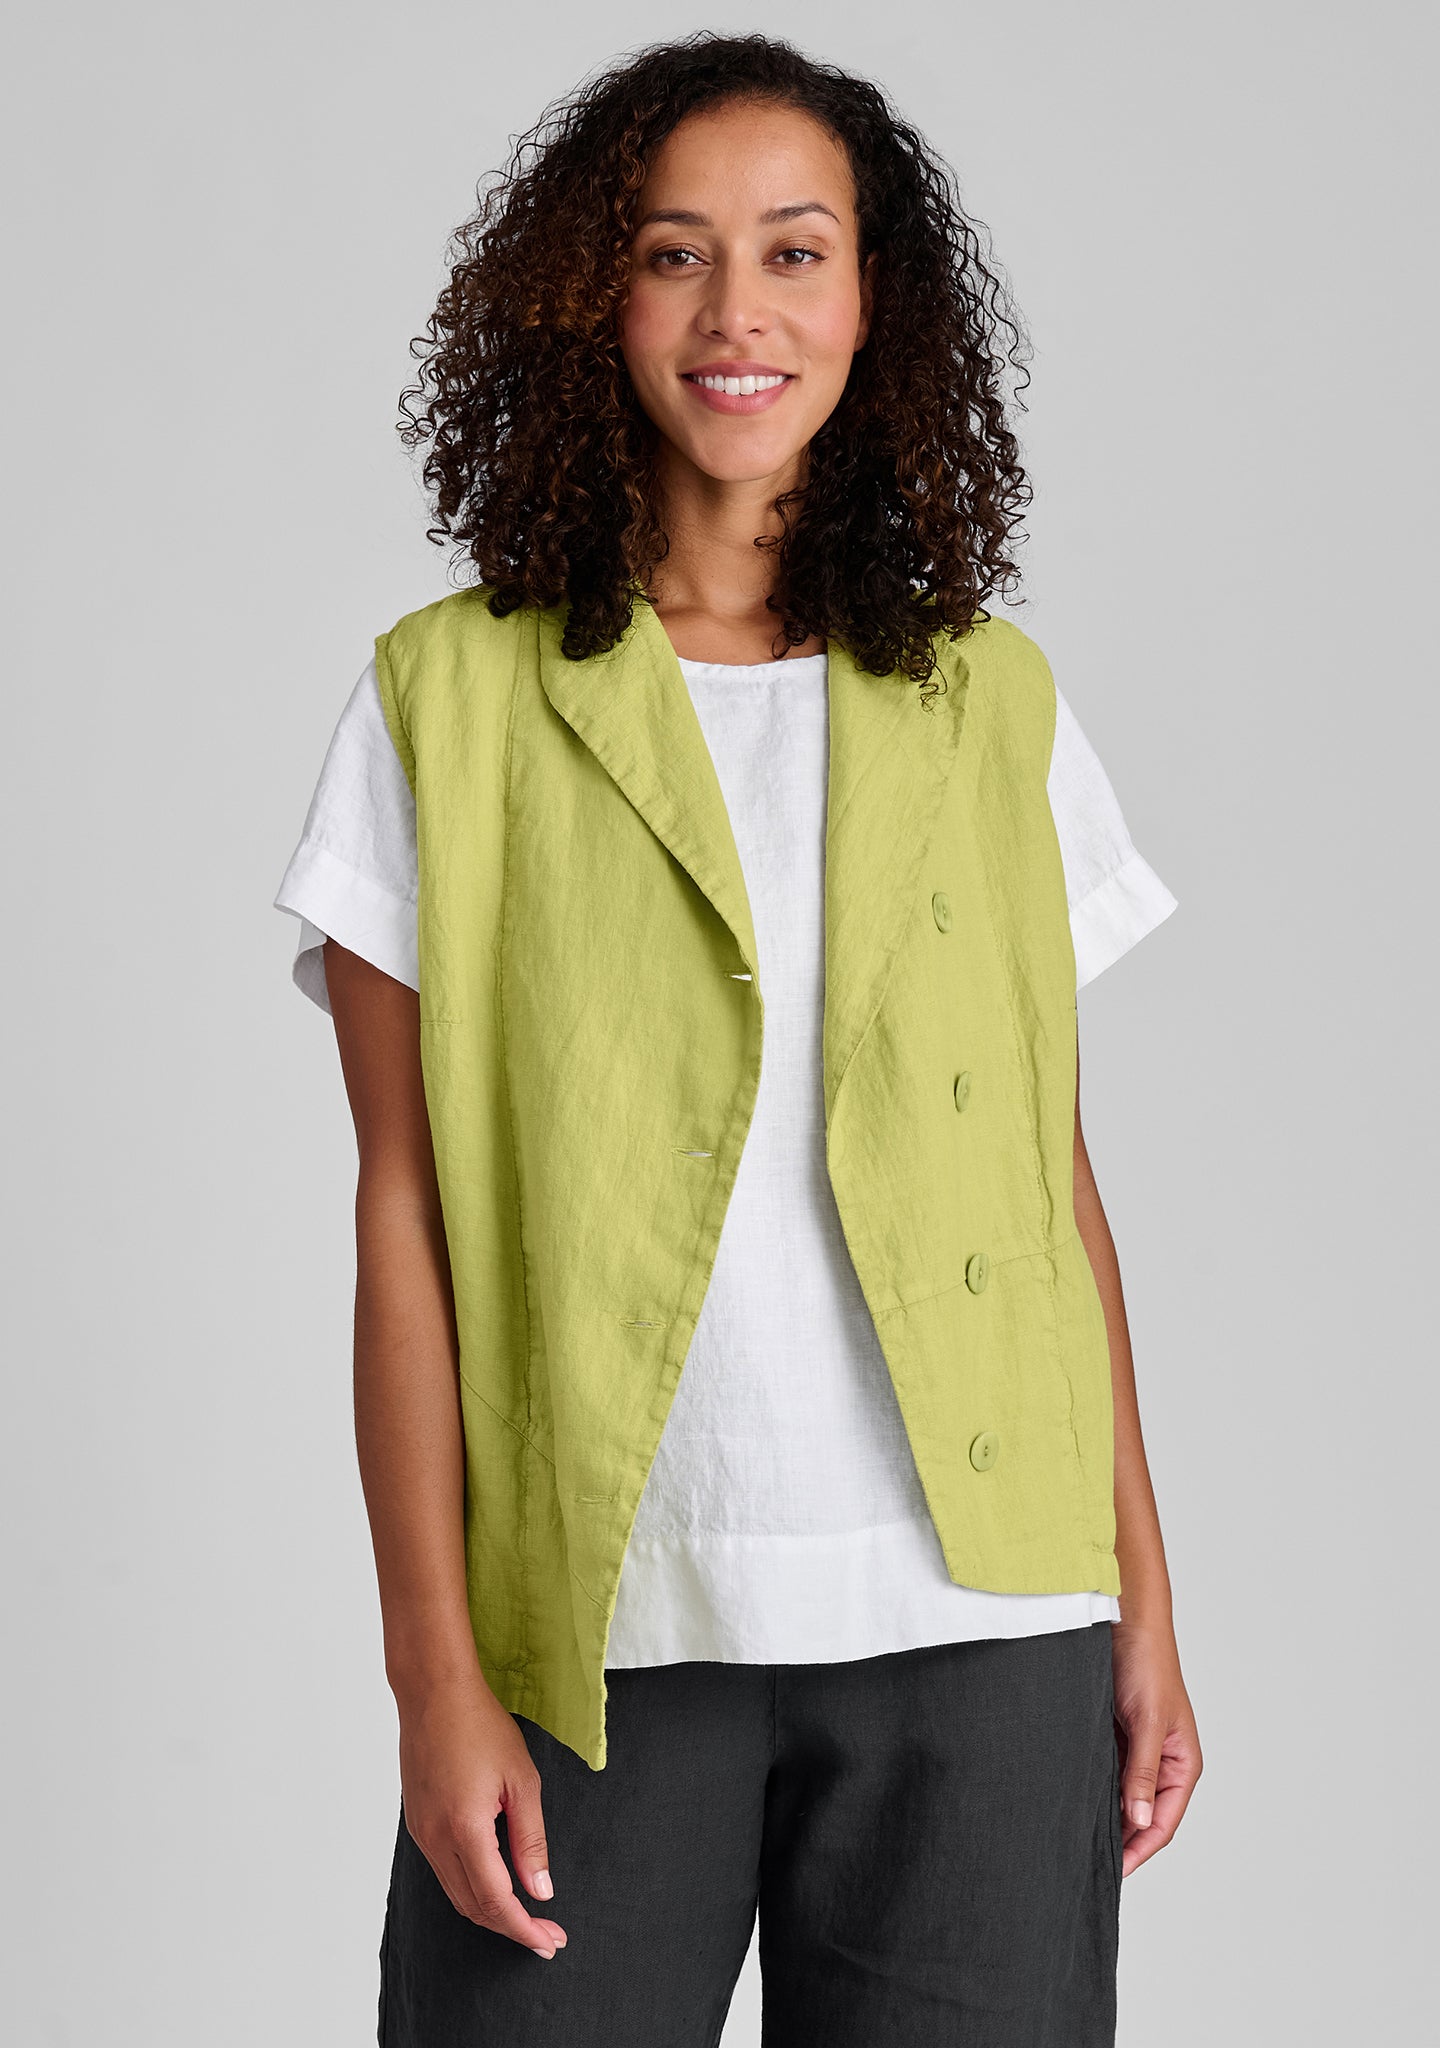 chelsea vest linen vest green